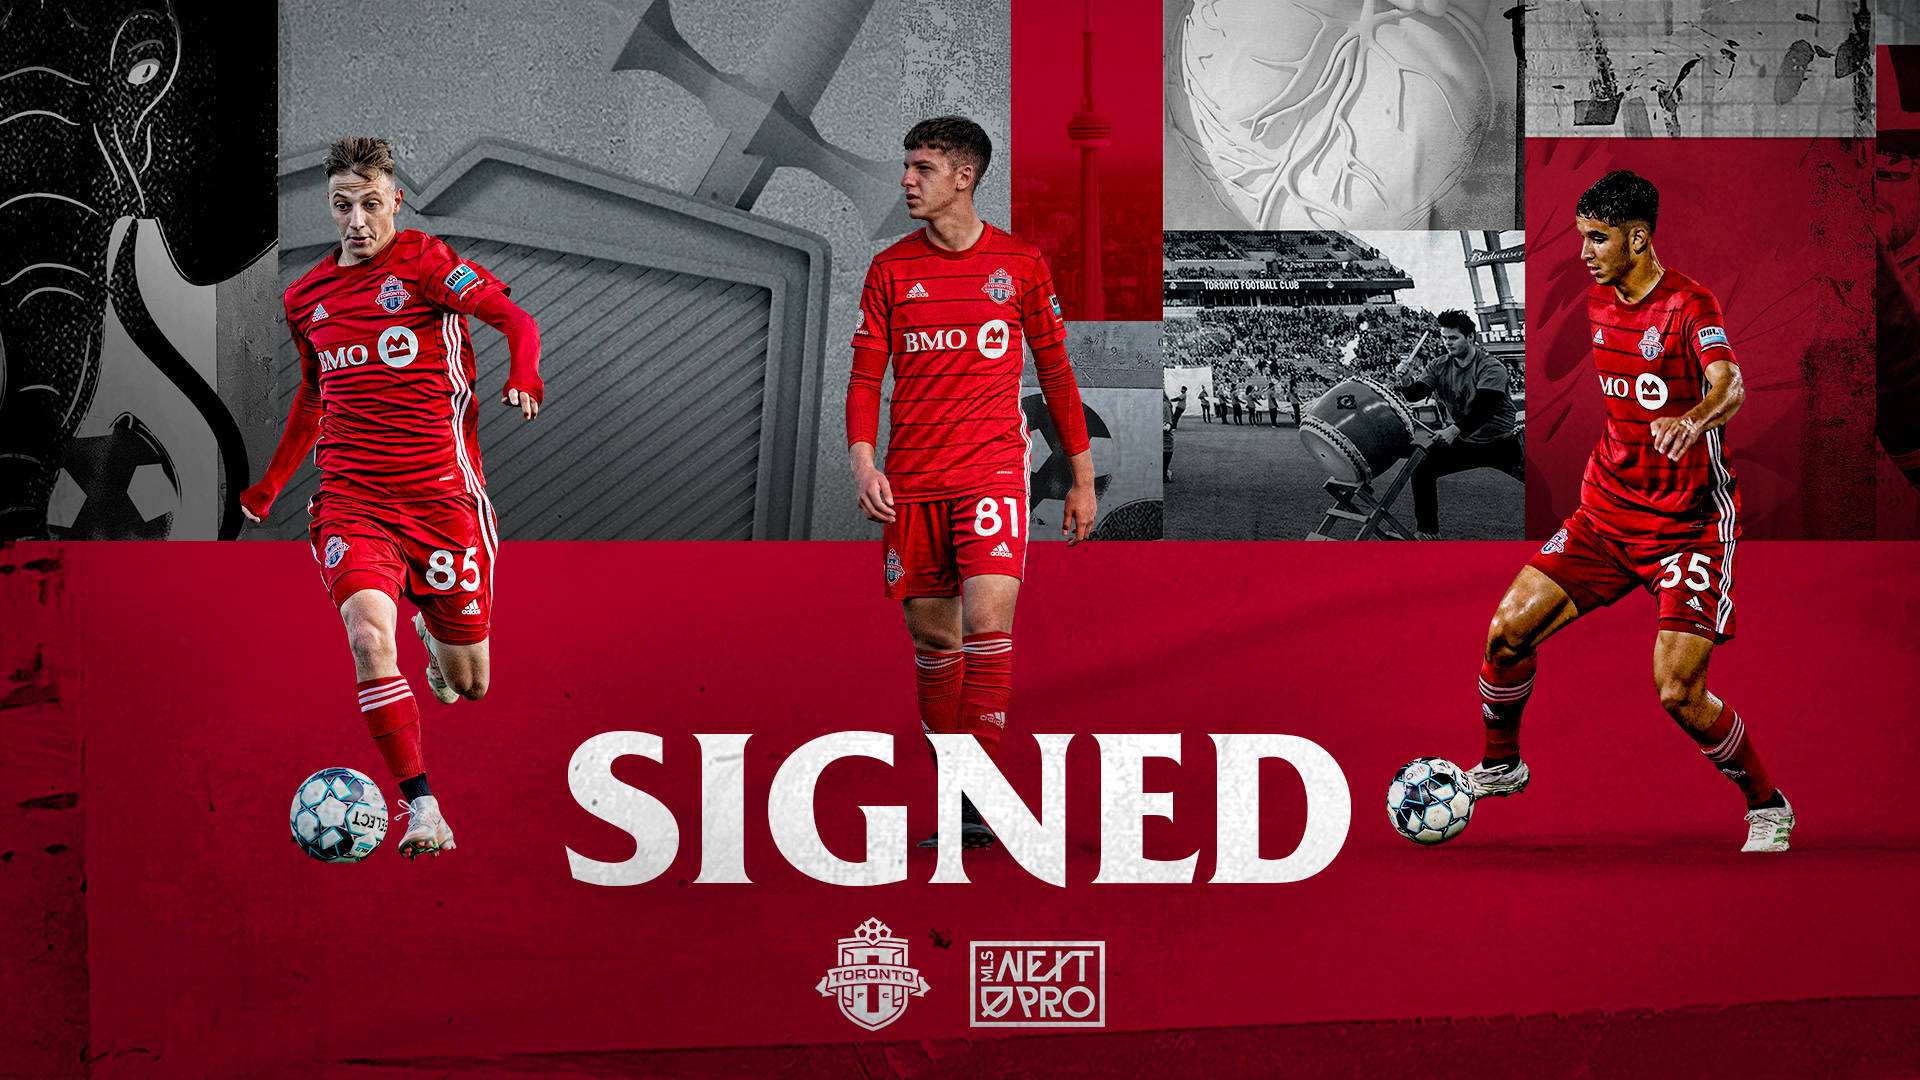 Torontofc Team Signerade Akademin. Wallpaper